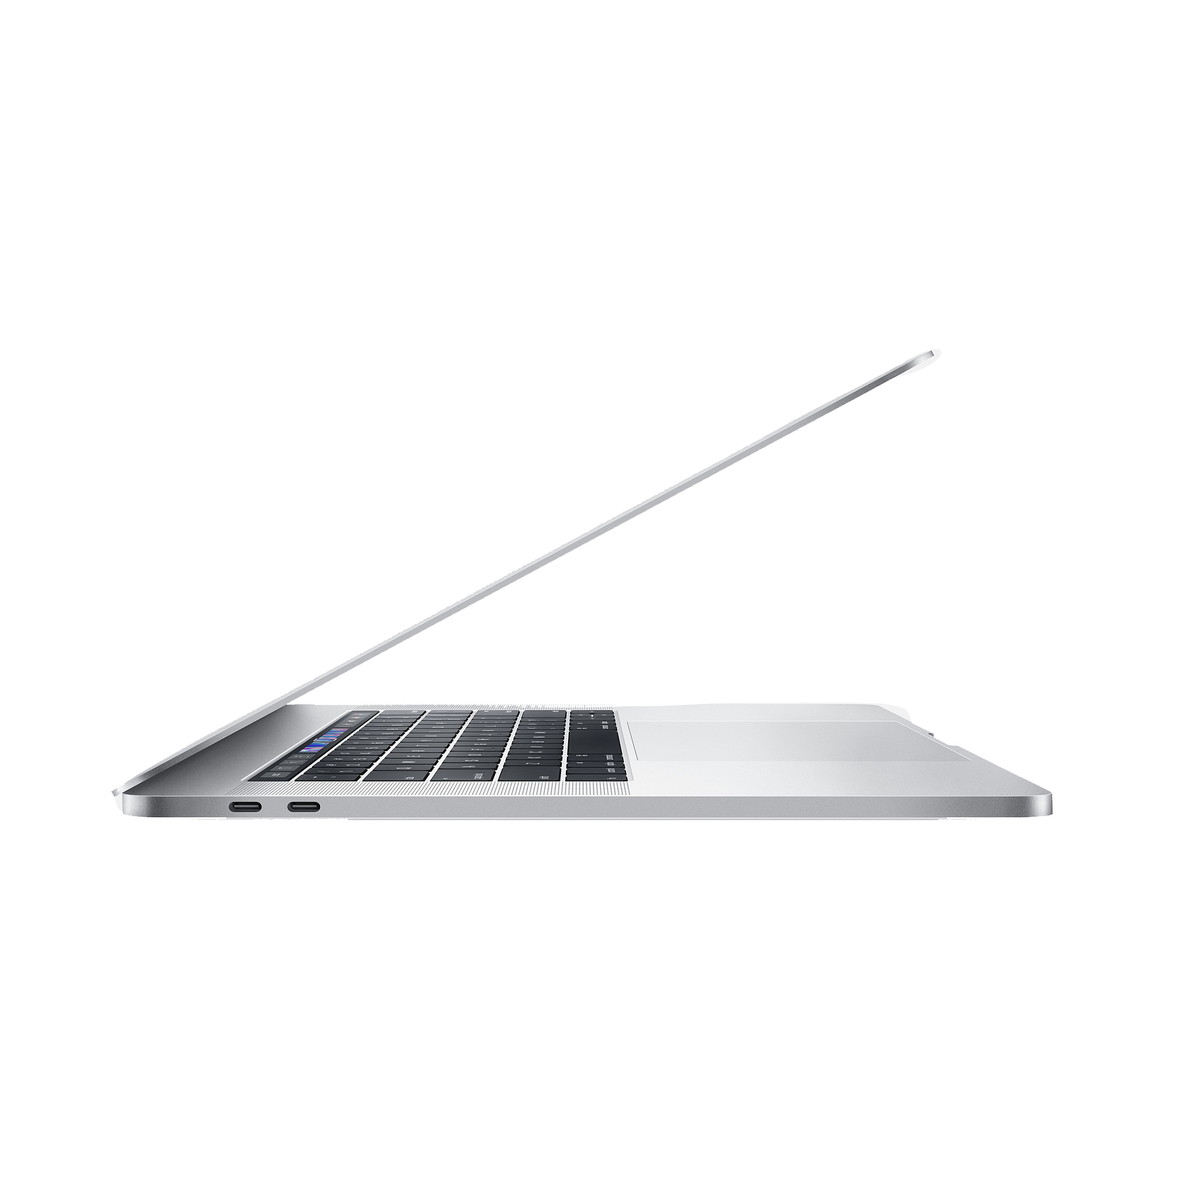 MacBook Pro Touch Bar With 15.4-Inch Retina Display, Core i7 Processor/8GB RAM/256GB SSD/Silver(MV922AB/A)